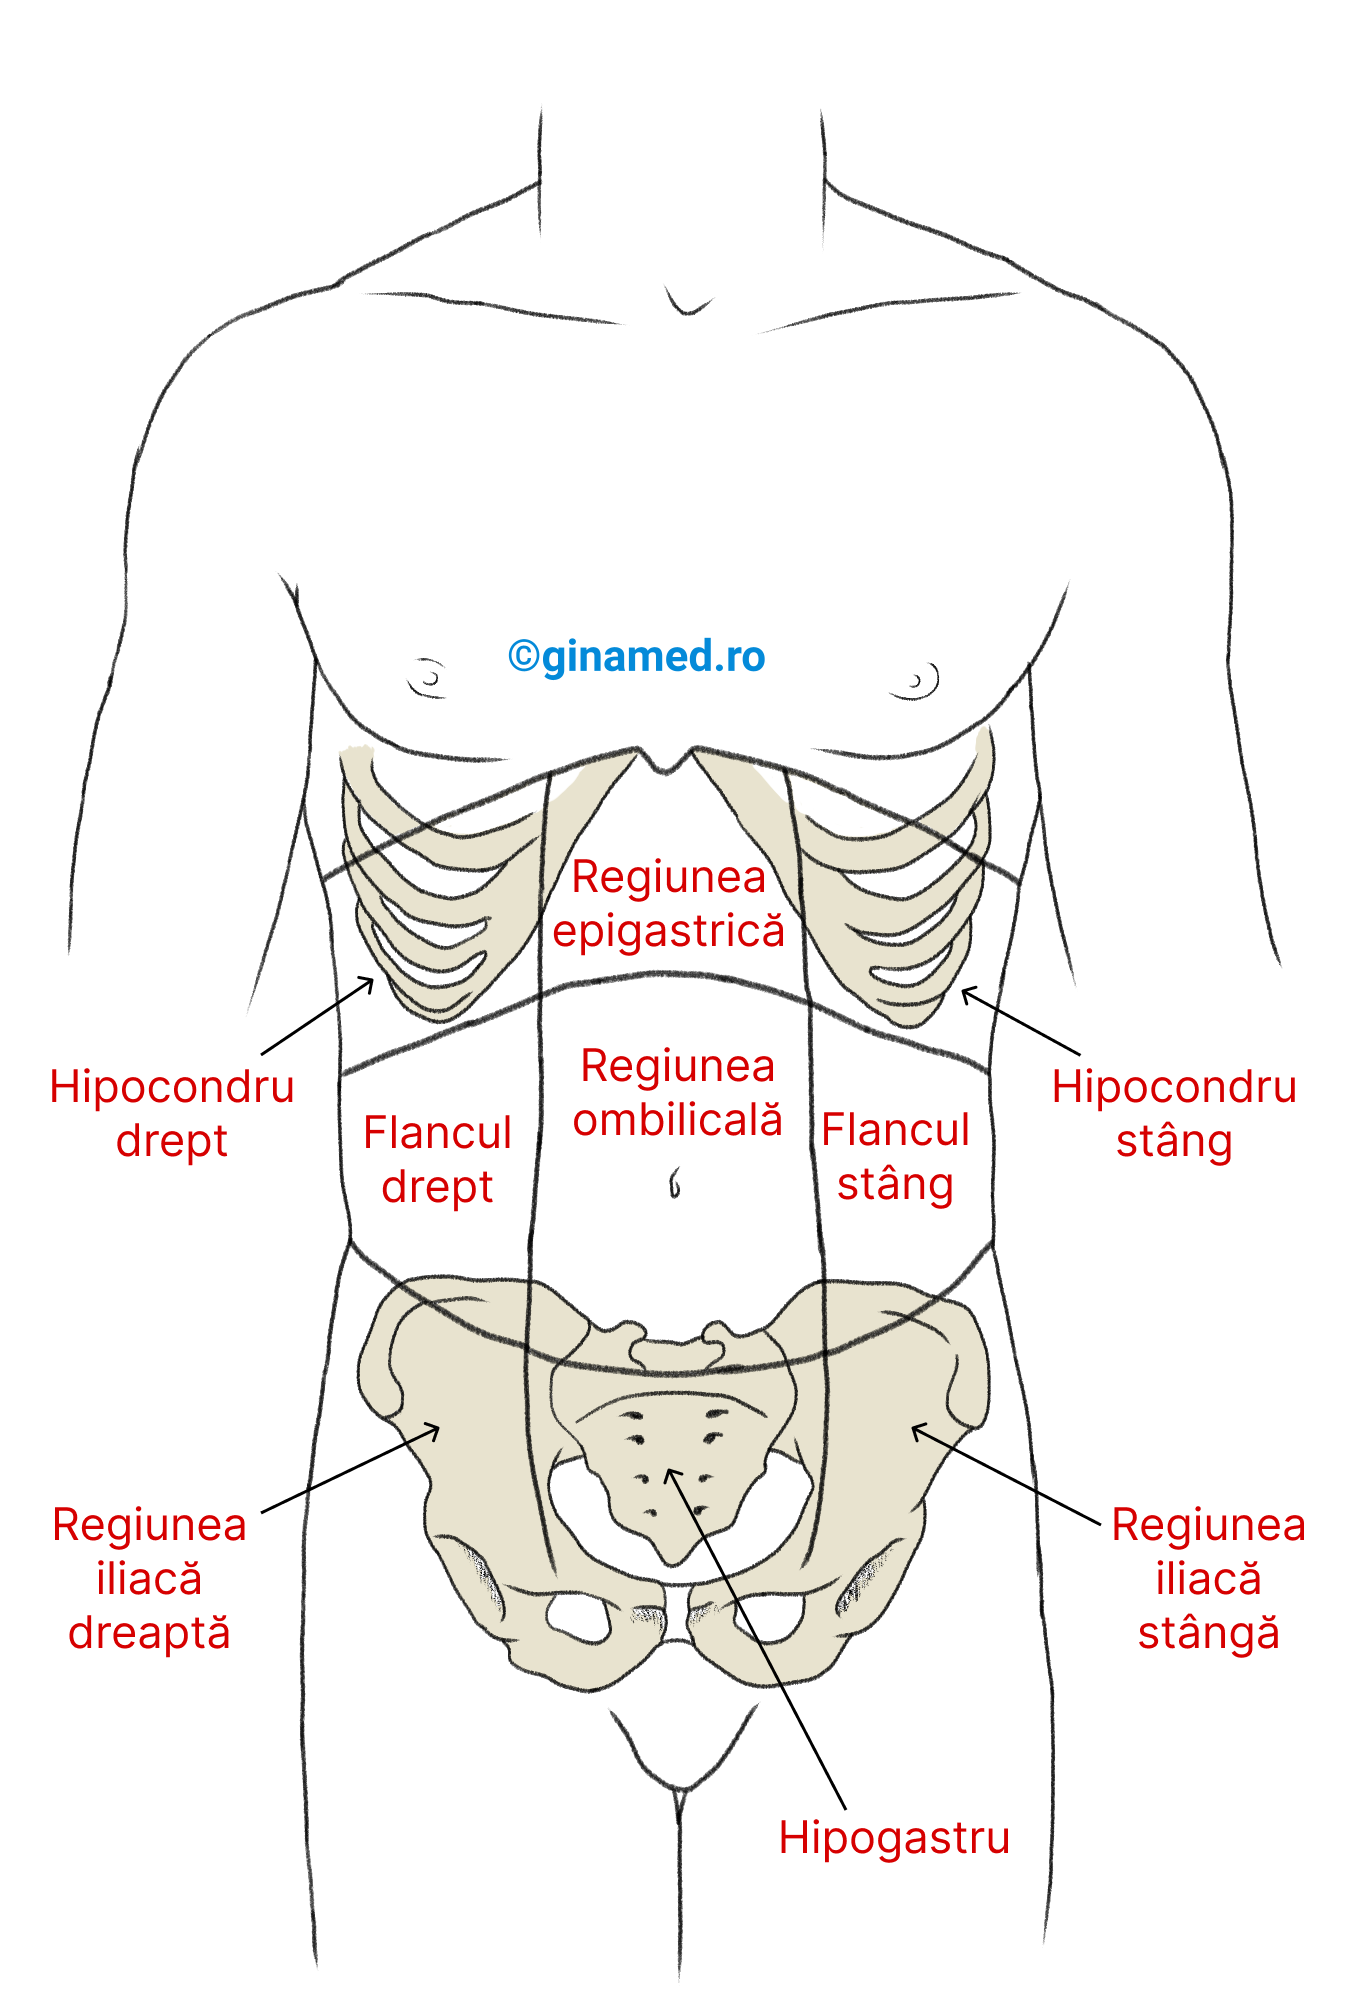 Regiuni anatomice ale cavității abdomino-pelviene.